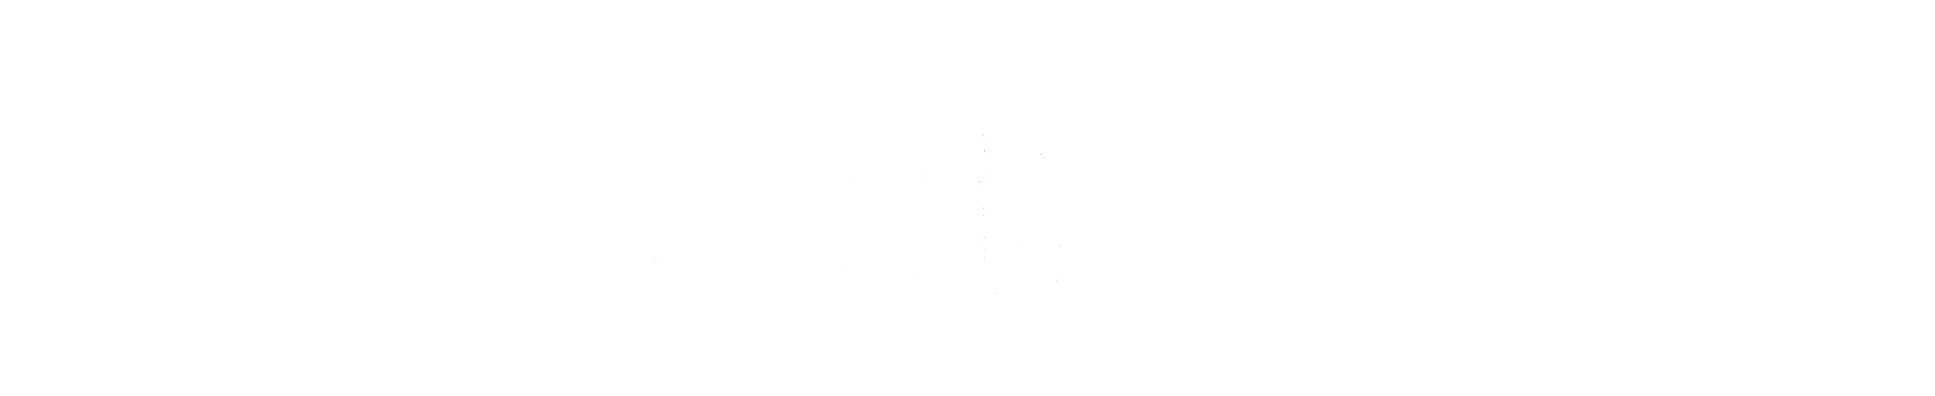 logo of brand Rêvelance in Vintage typewriter style